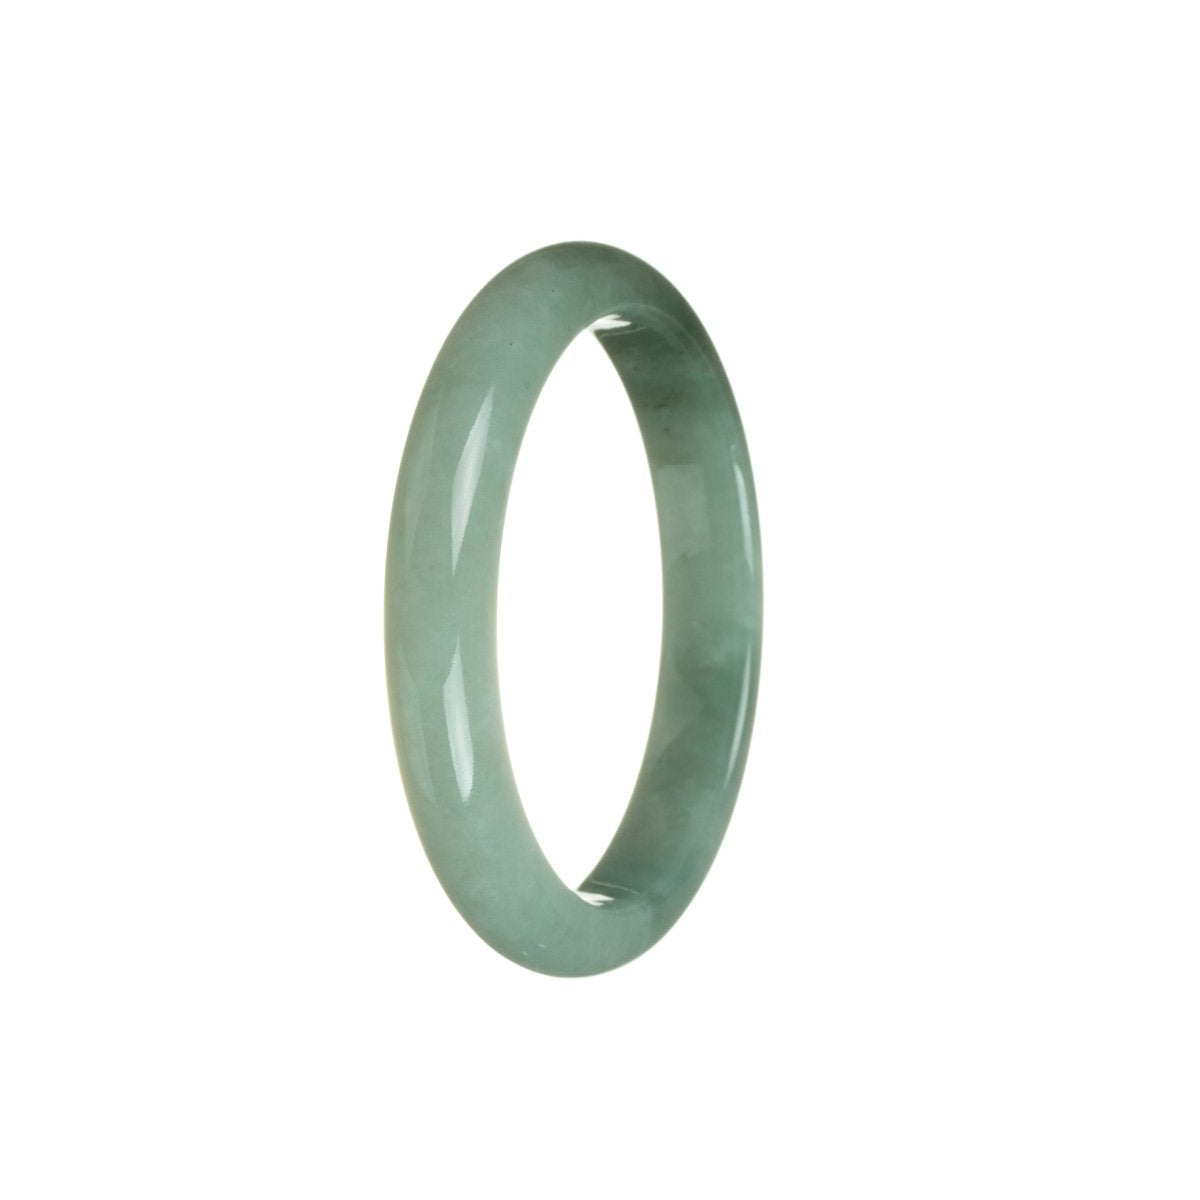 Certified Type A Green Jade Bangle Bracelet - 55mm Half Moon